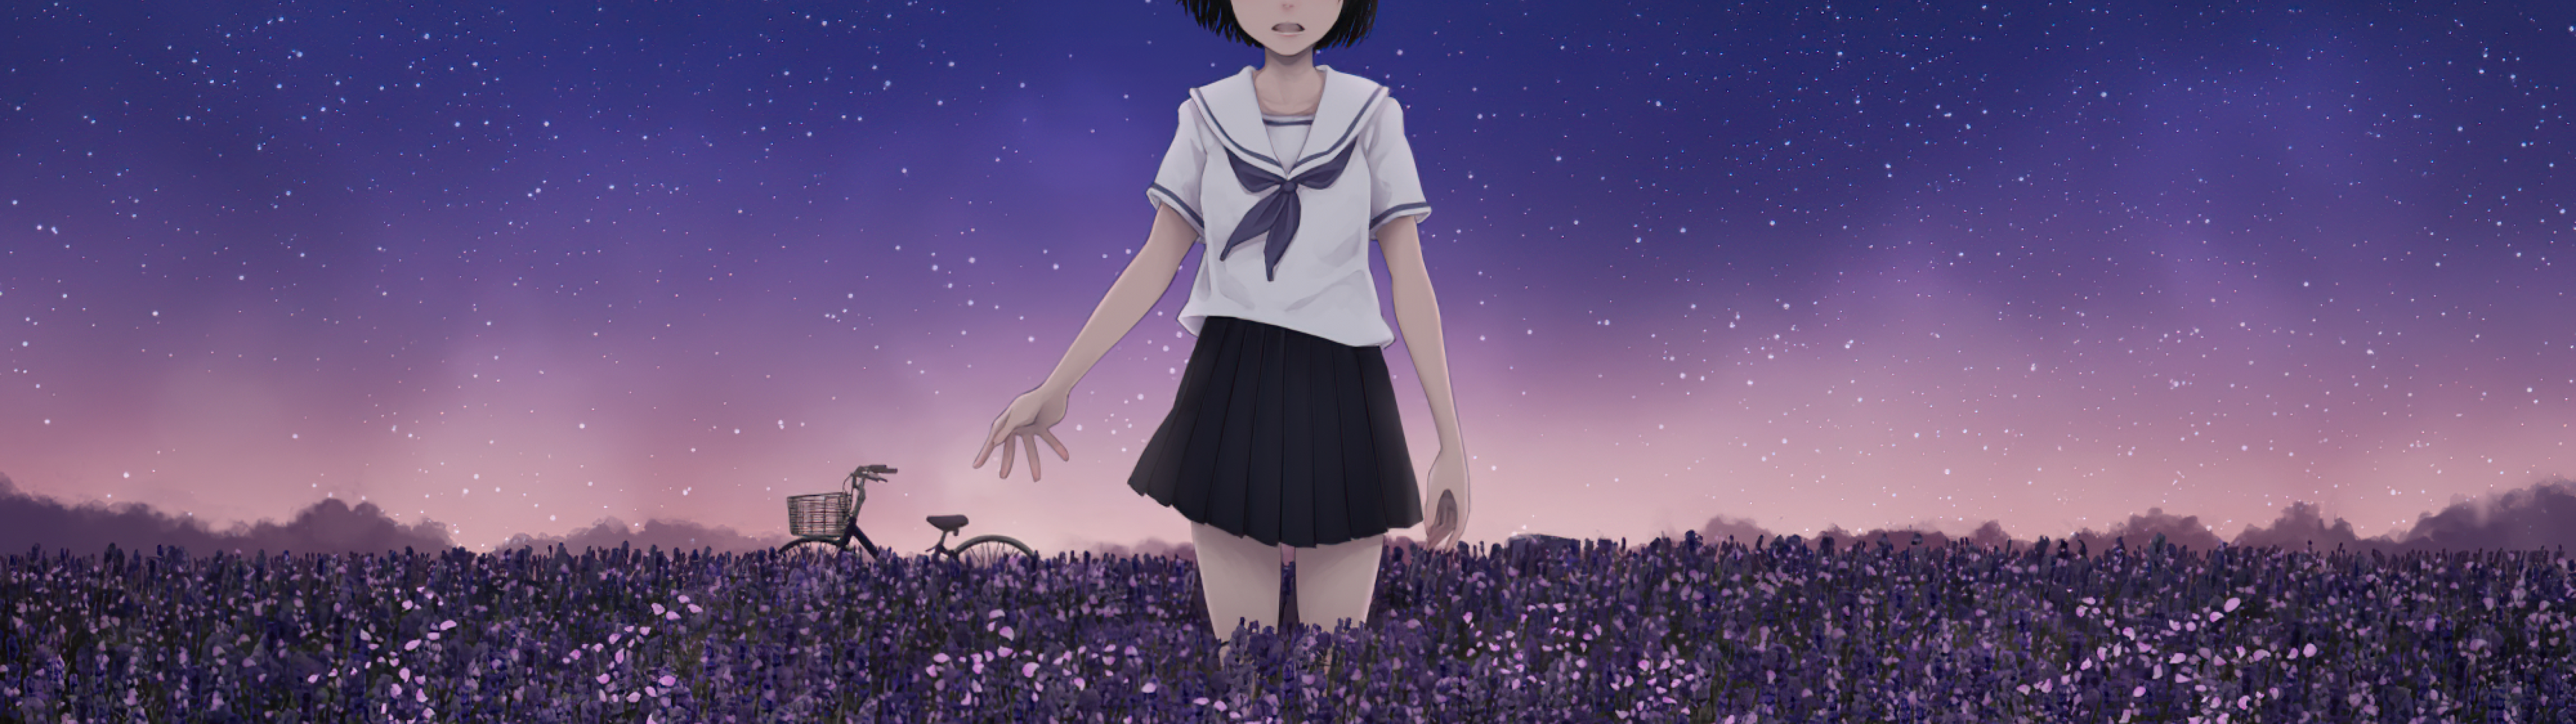 Anime Student Girl School Uniform PC Desktop 4K Wallpaper free Download